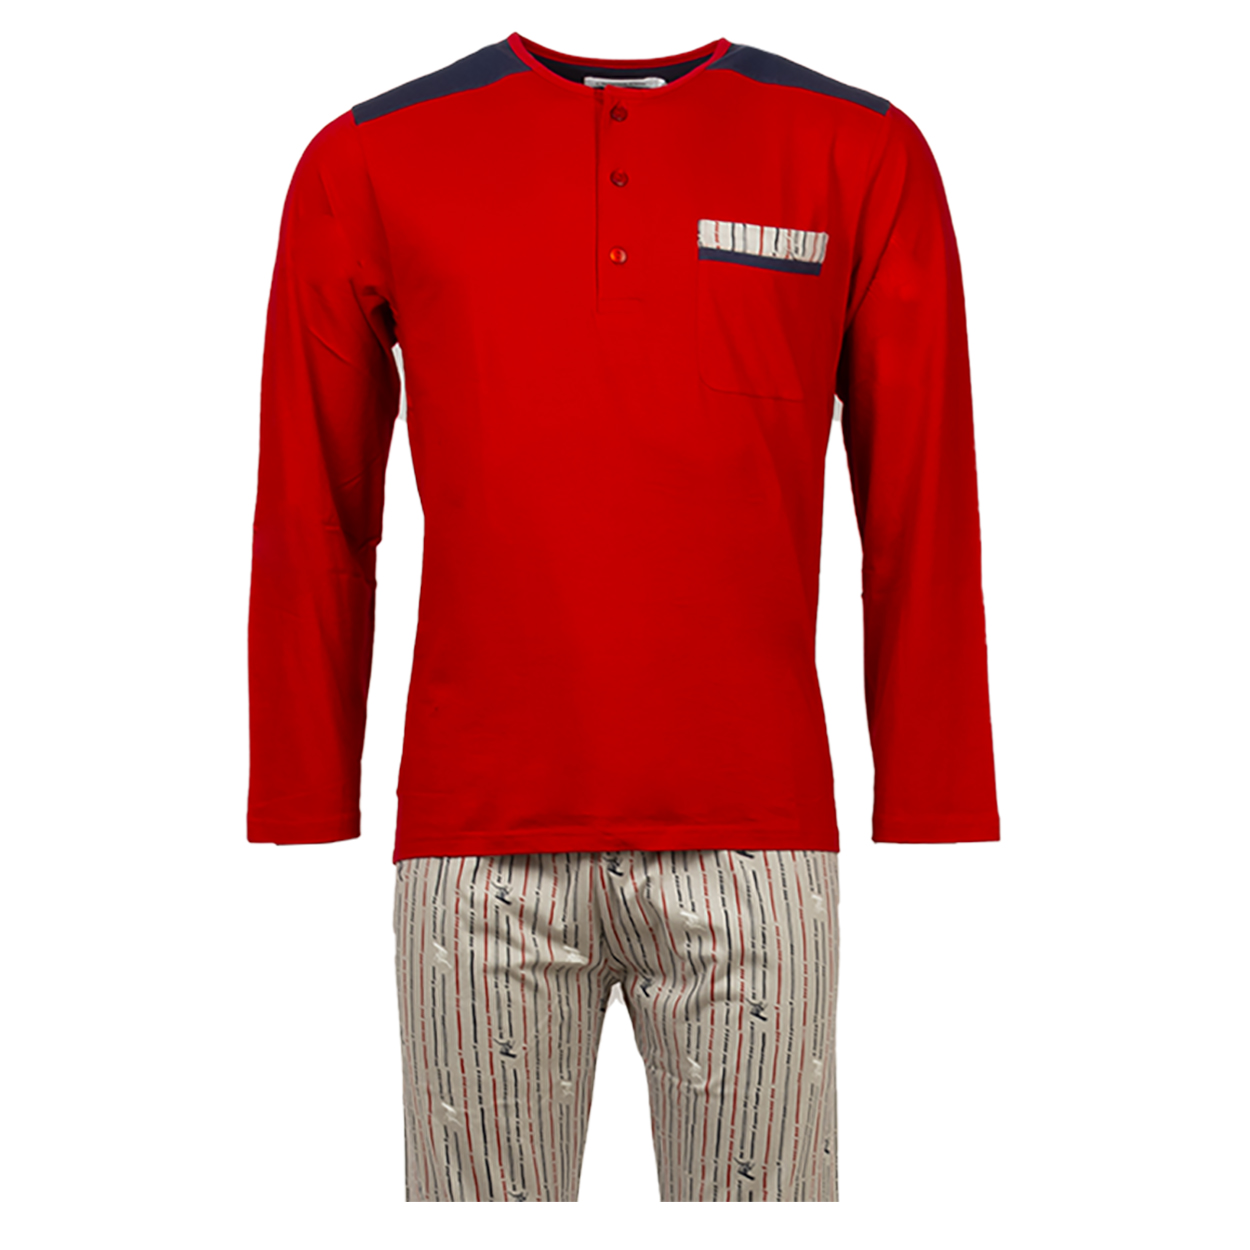 Pyjama long Christian Cane Bornan en coton : tee-shirt col tunisien manches longues rouge et pantalo